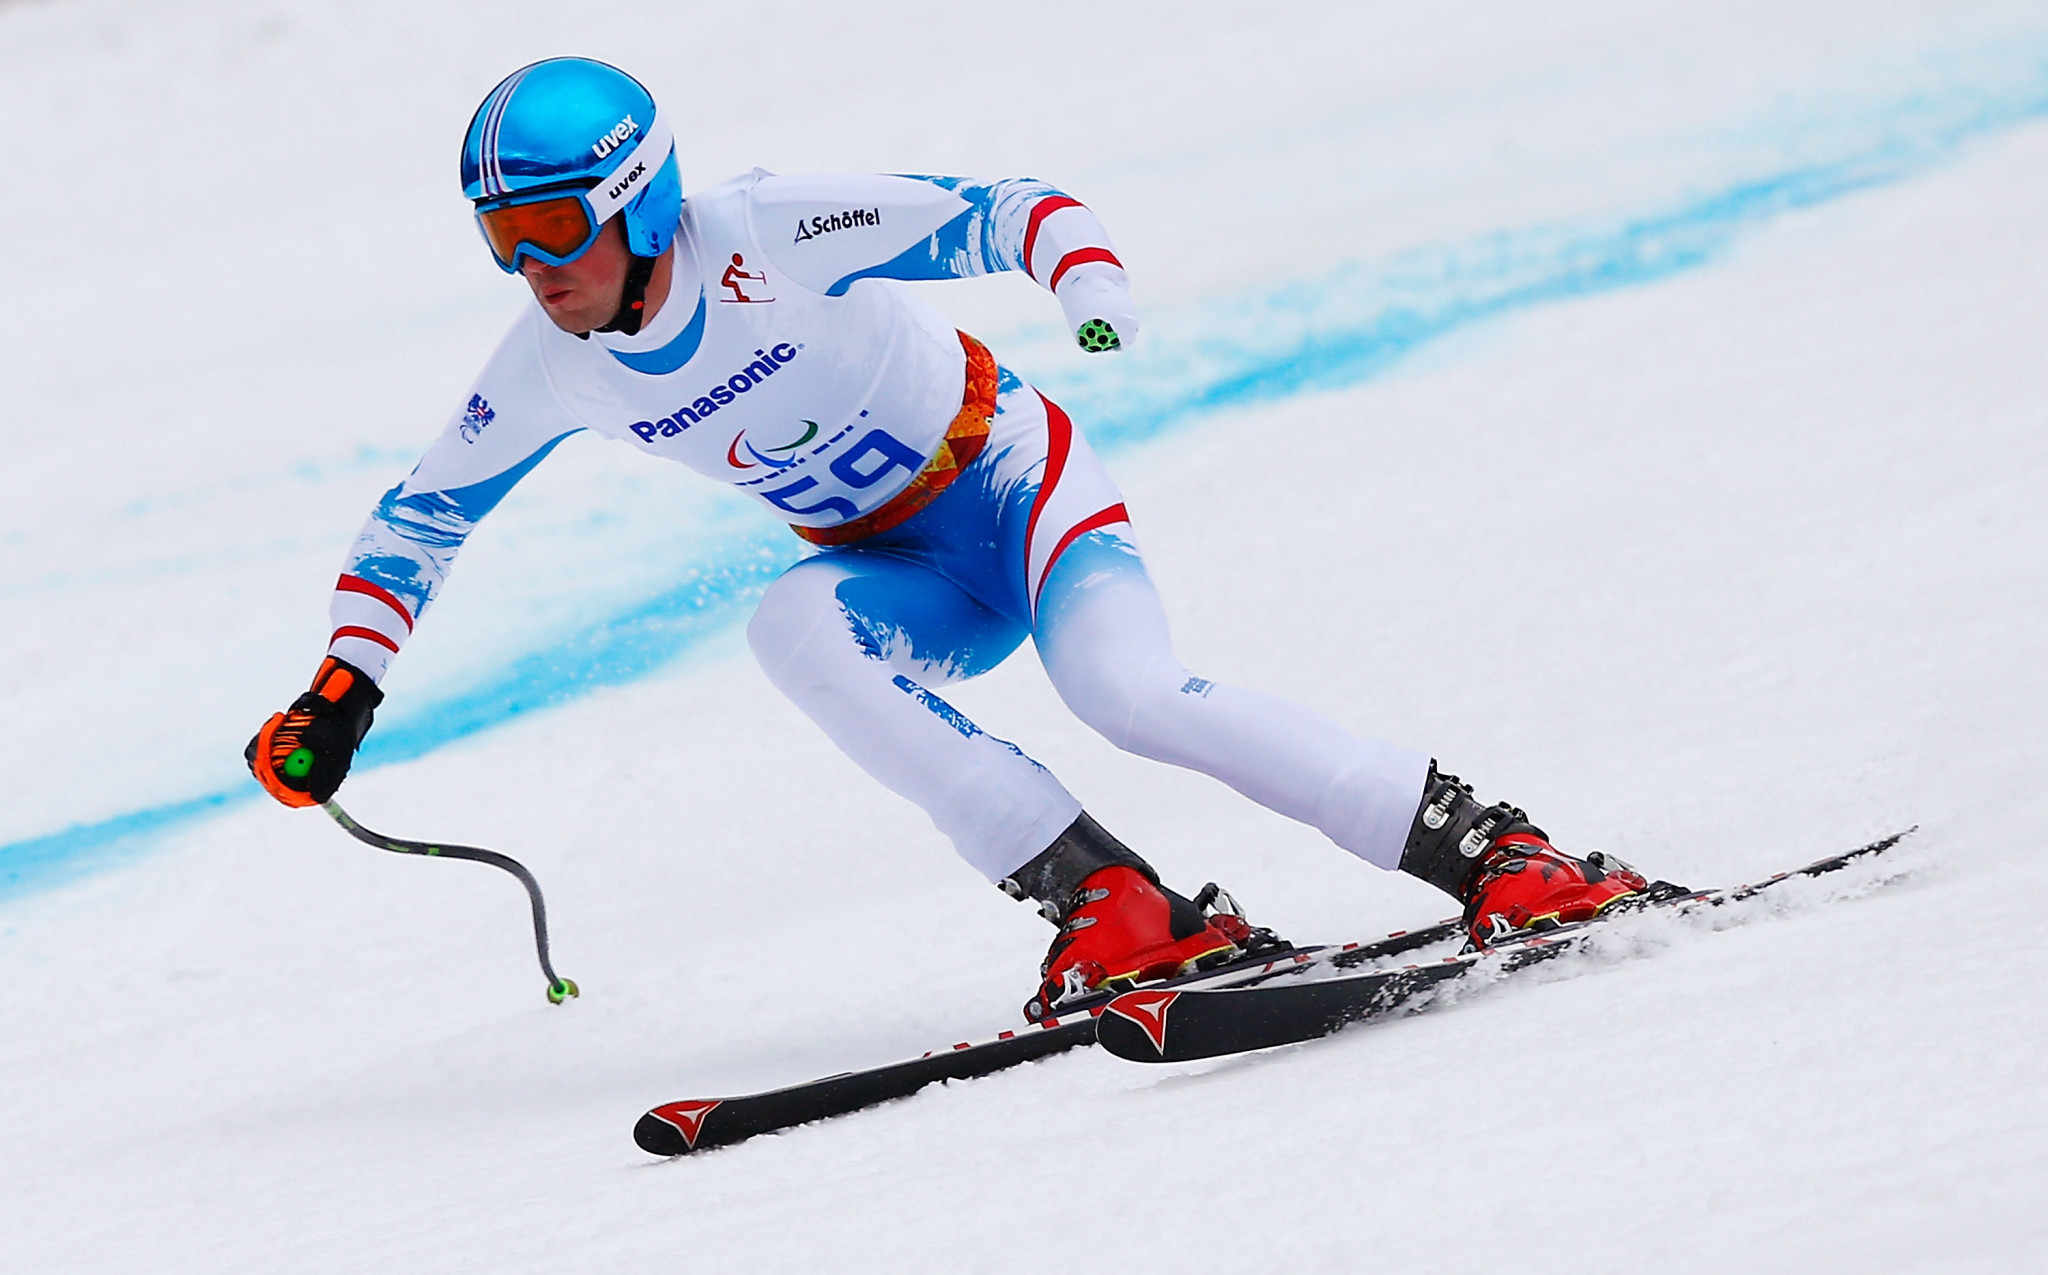 Martin Wuerz enjoyed men's slalom success ©Getty Images